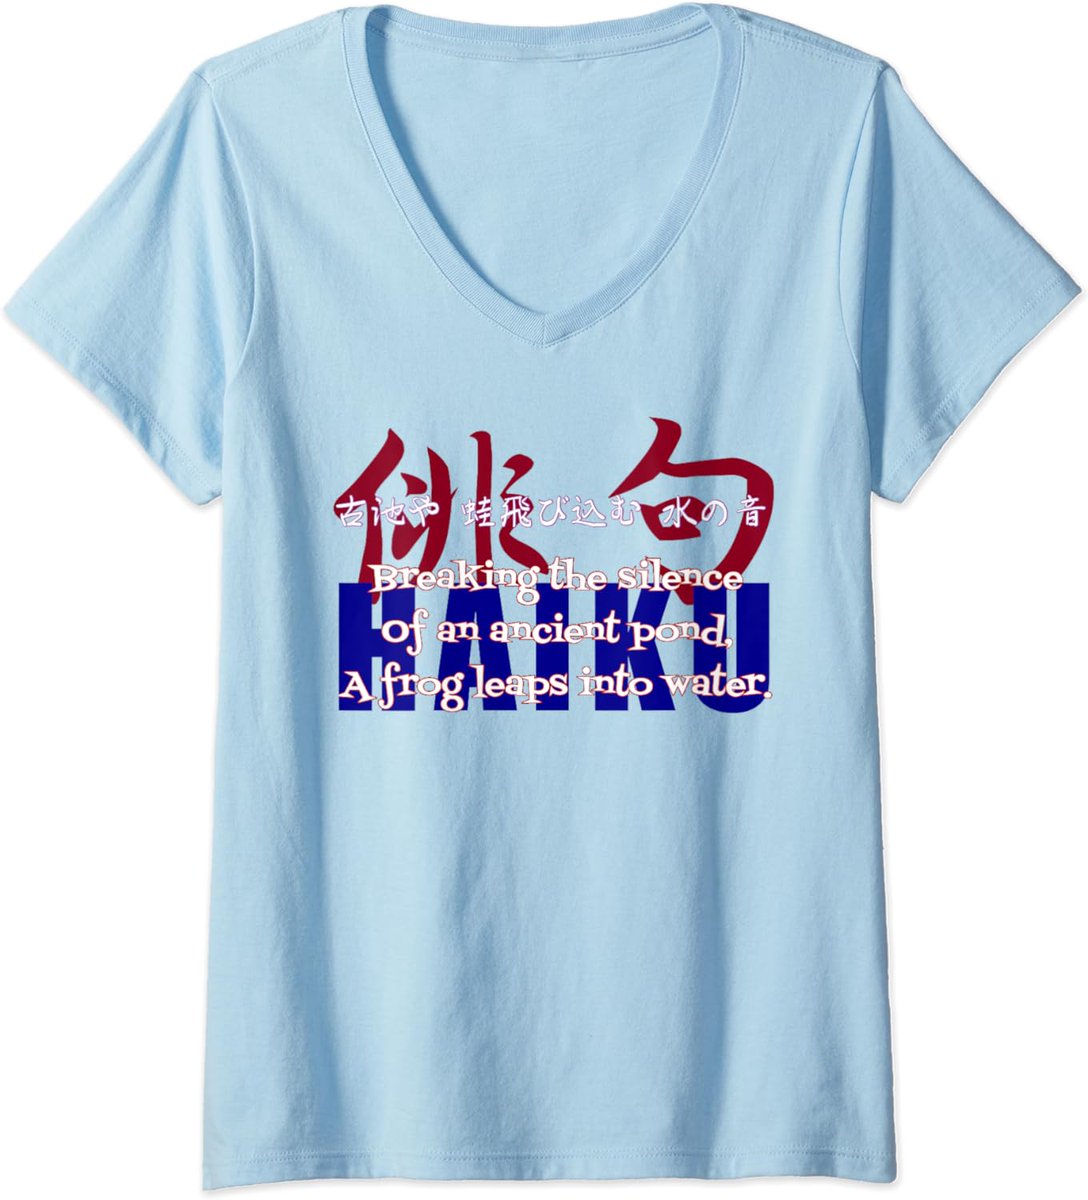 Womens Haiku V-Neck T-Shirt
amazon.com/dp/B0CTXB81TD?…
#Japan #design #print #printing #originaldesign #originalprint #poem #poems #lyrics #words #haiku #Japanese #ladiesfashion #ladiesapparel #womenapparel #womensfashion #vneck #tshirts #tshirtprinting #shirts #fashion #tshirt